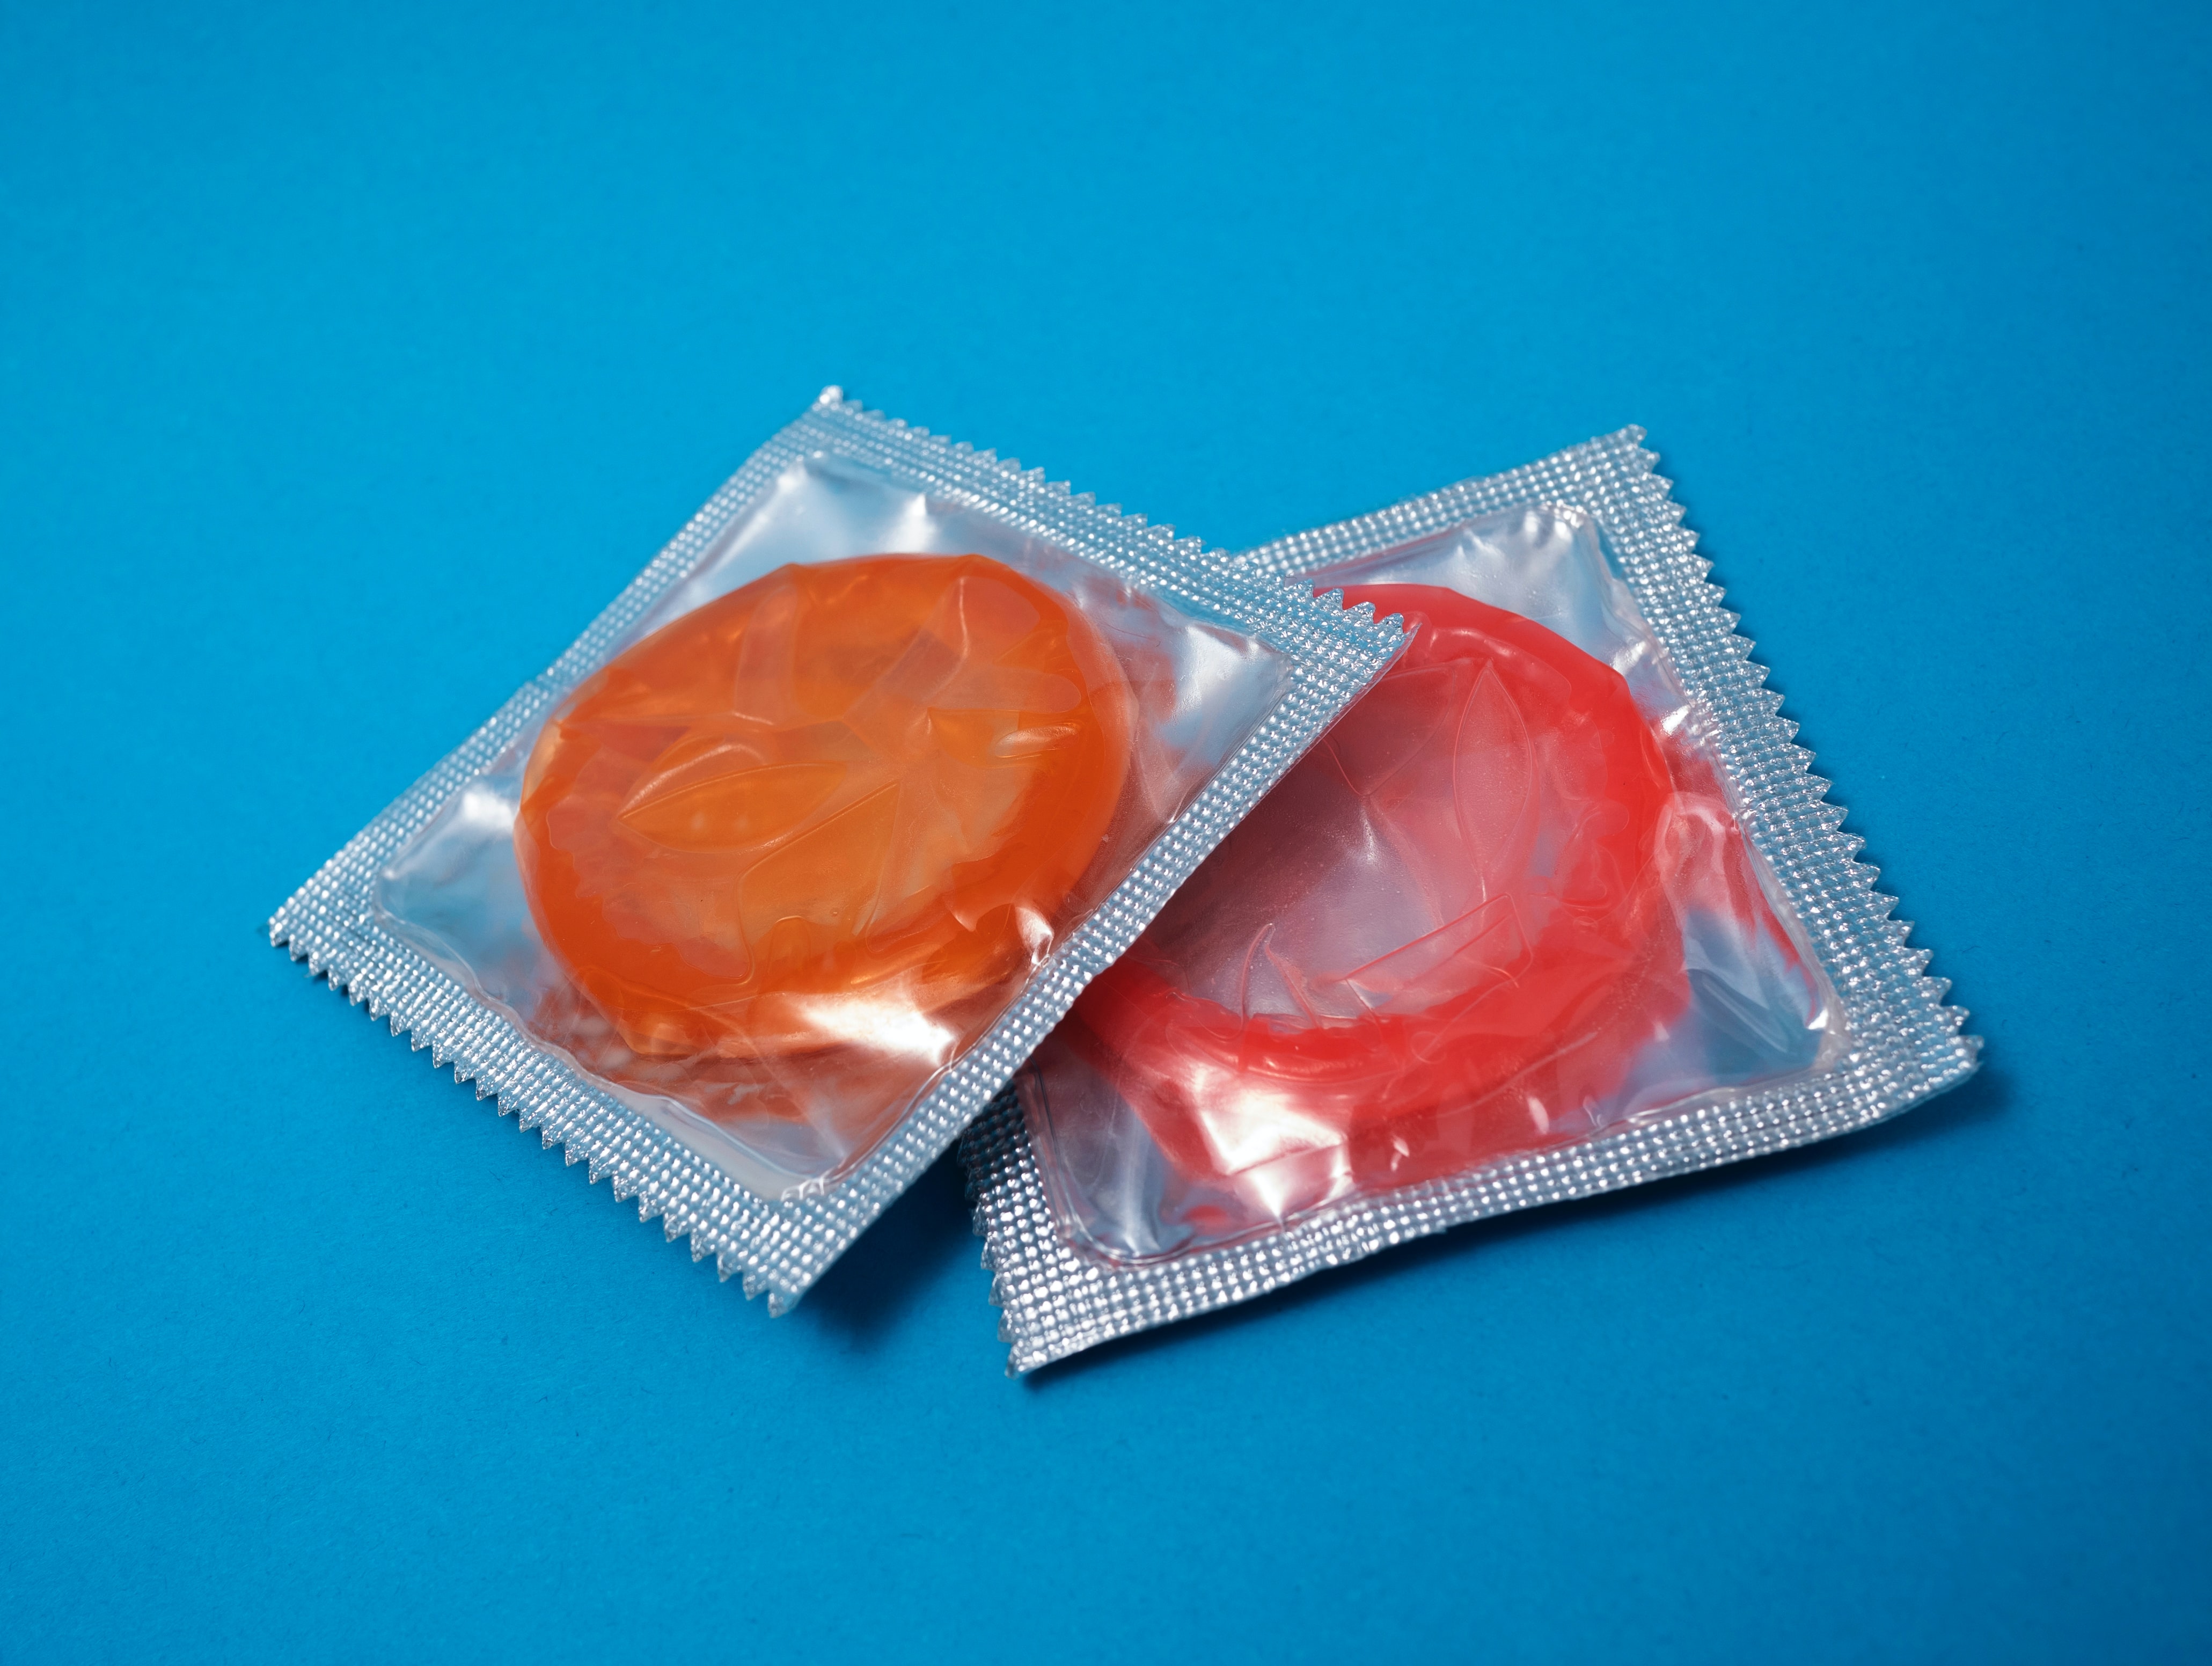 condoms photo from unsplash